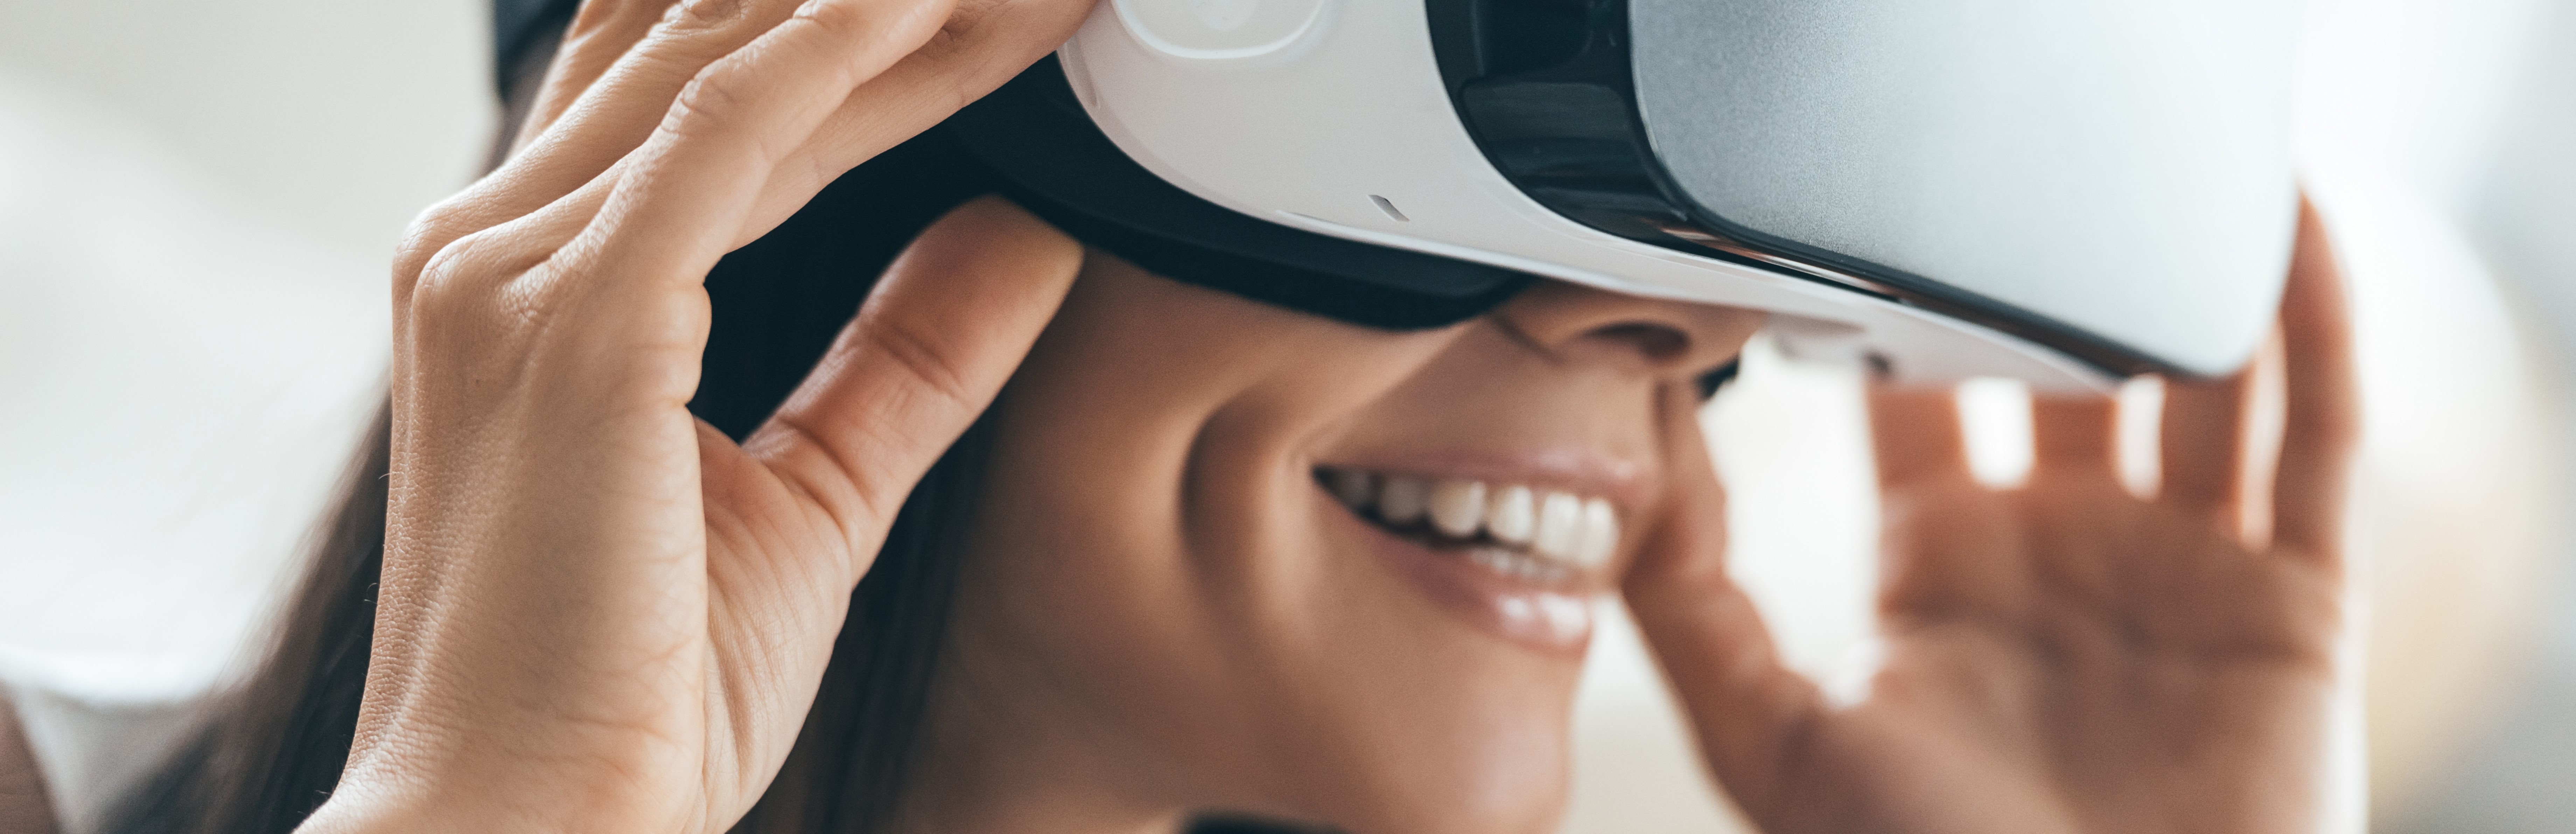 VR - Virtuel Præsentation